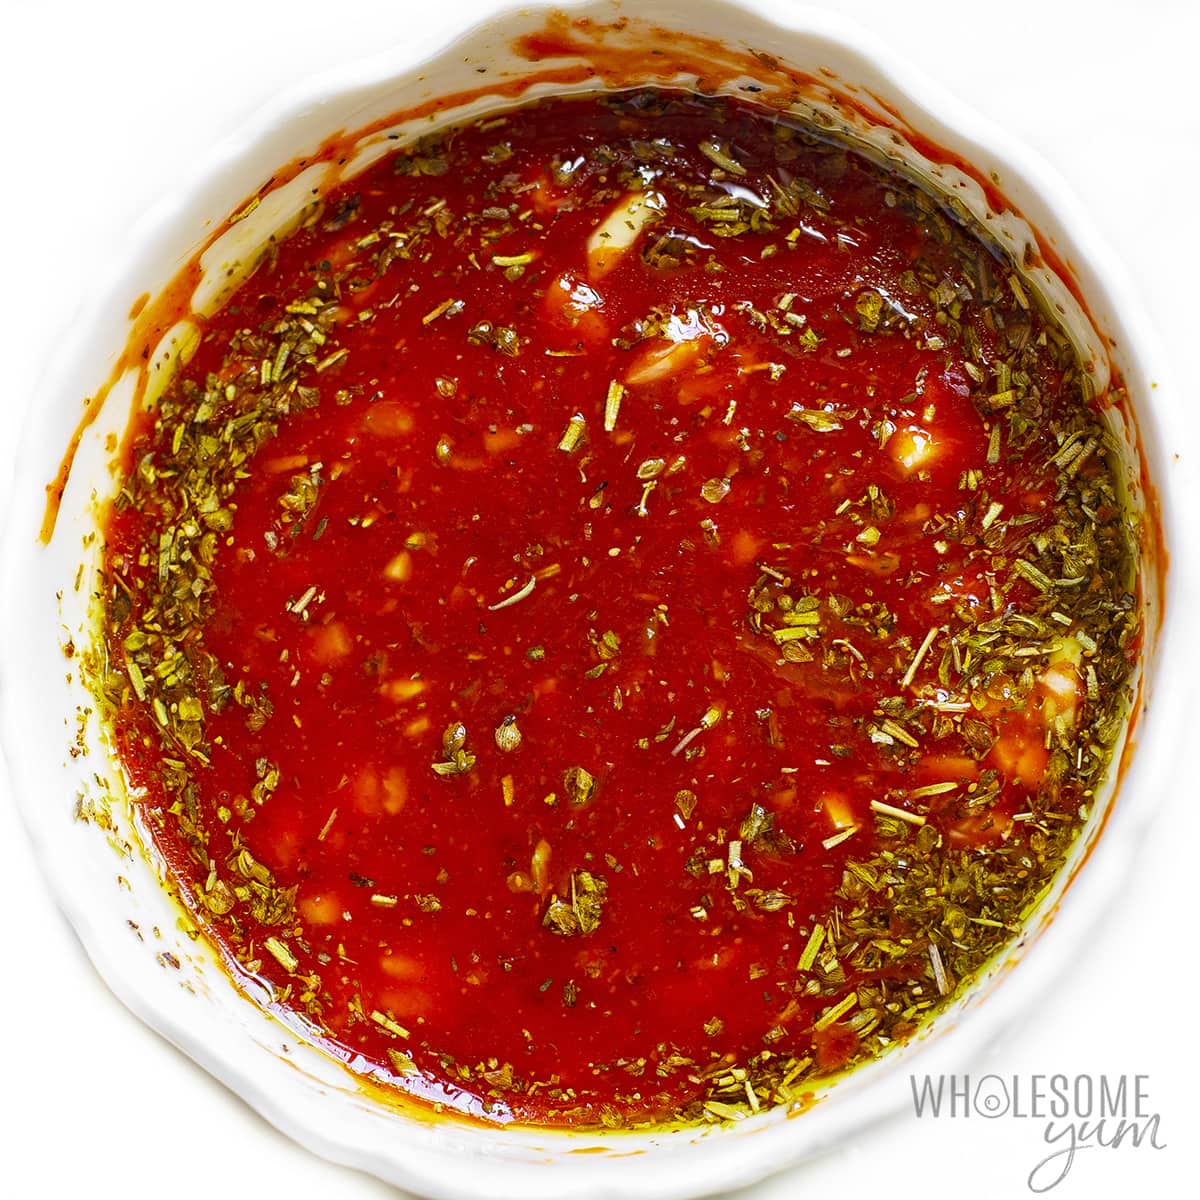 Honey sriracha sauce mixed in a bowl.